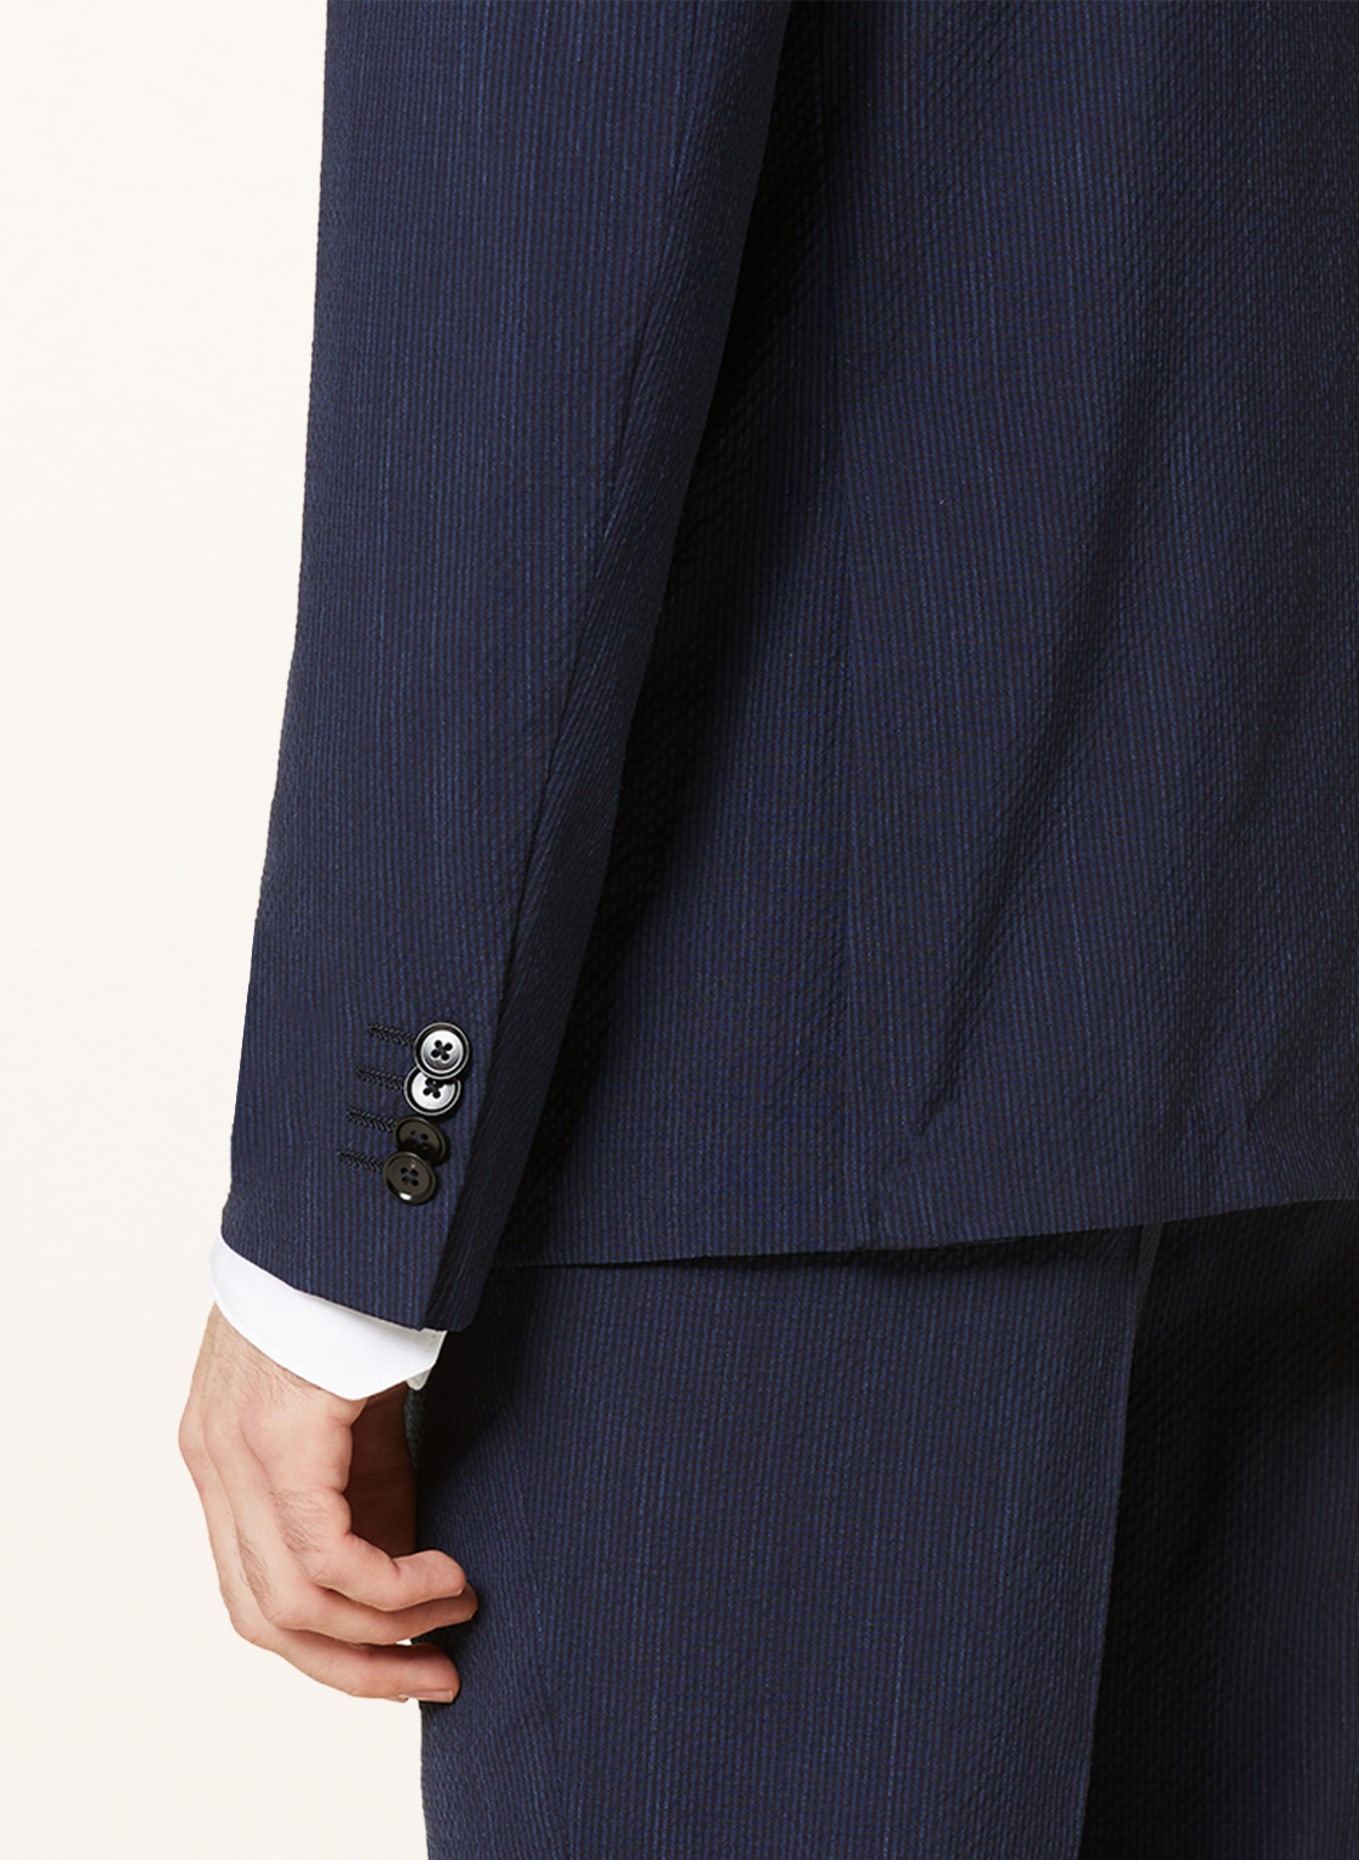 ZEGNA Suit jacket regular fit in merino wool, Color: DARK BLUE (Image 6)